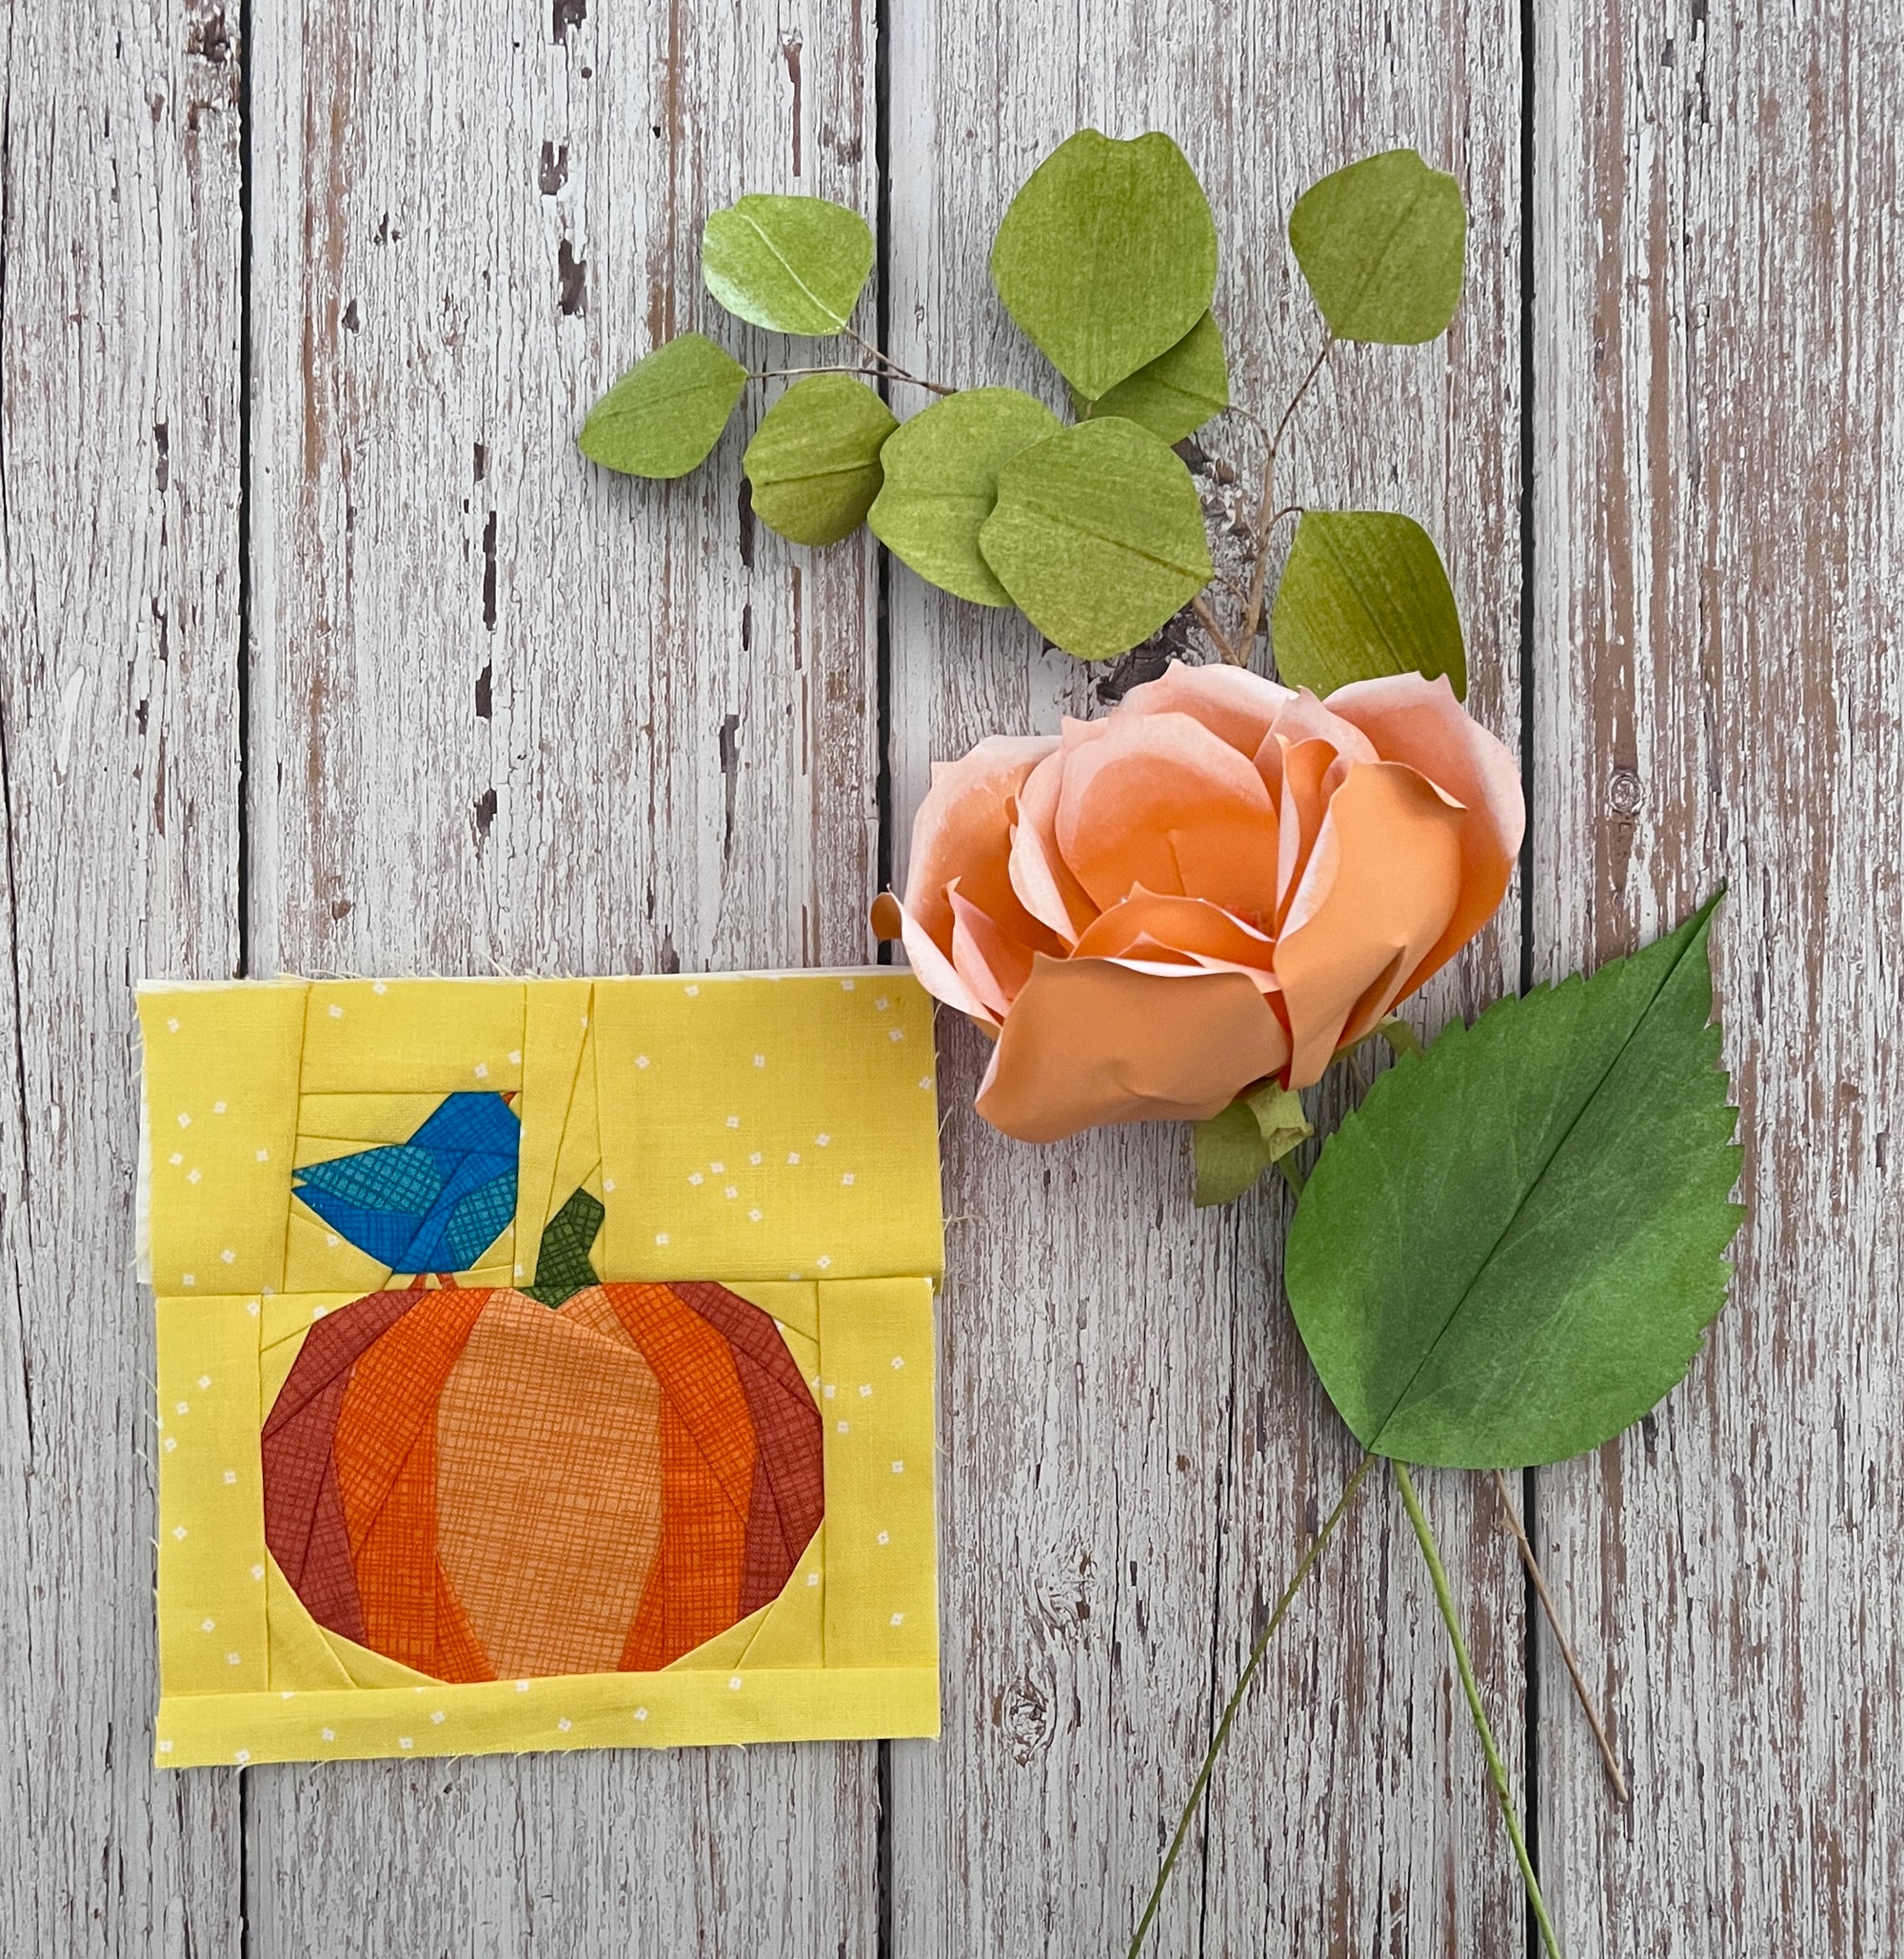 tweet bird on a pumpkin paper pieced pattern sewn in fabric